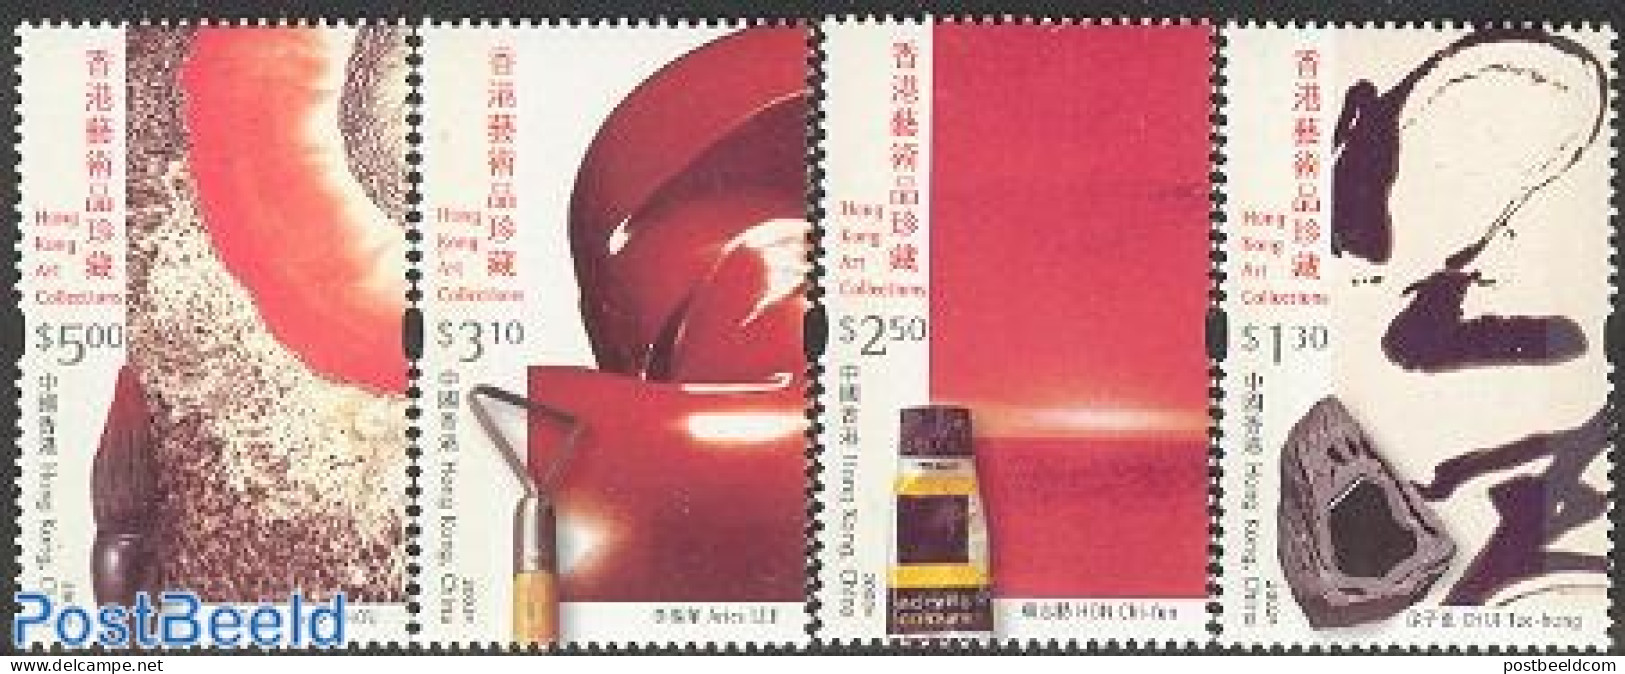 Hong Kong 2002 Art Collection 4v, Mint NH, Art - Modern Art (1850-present) - Unused Stamps